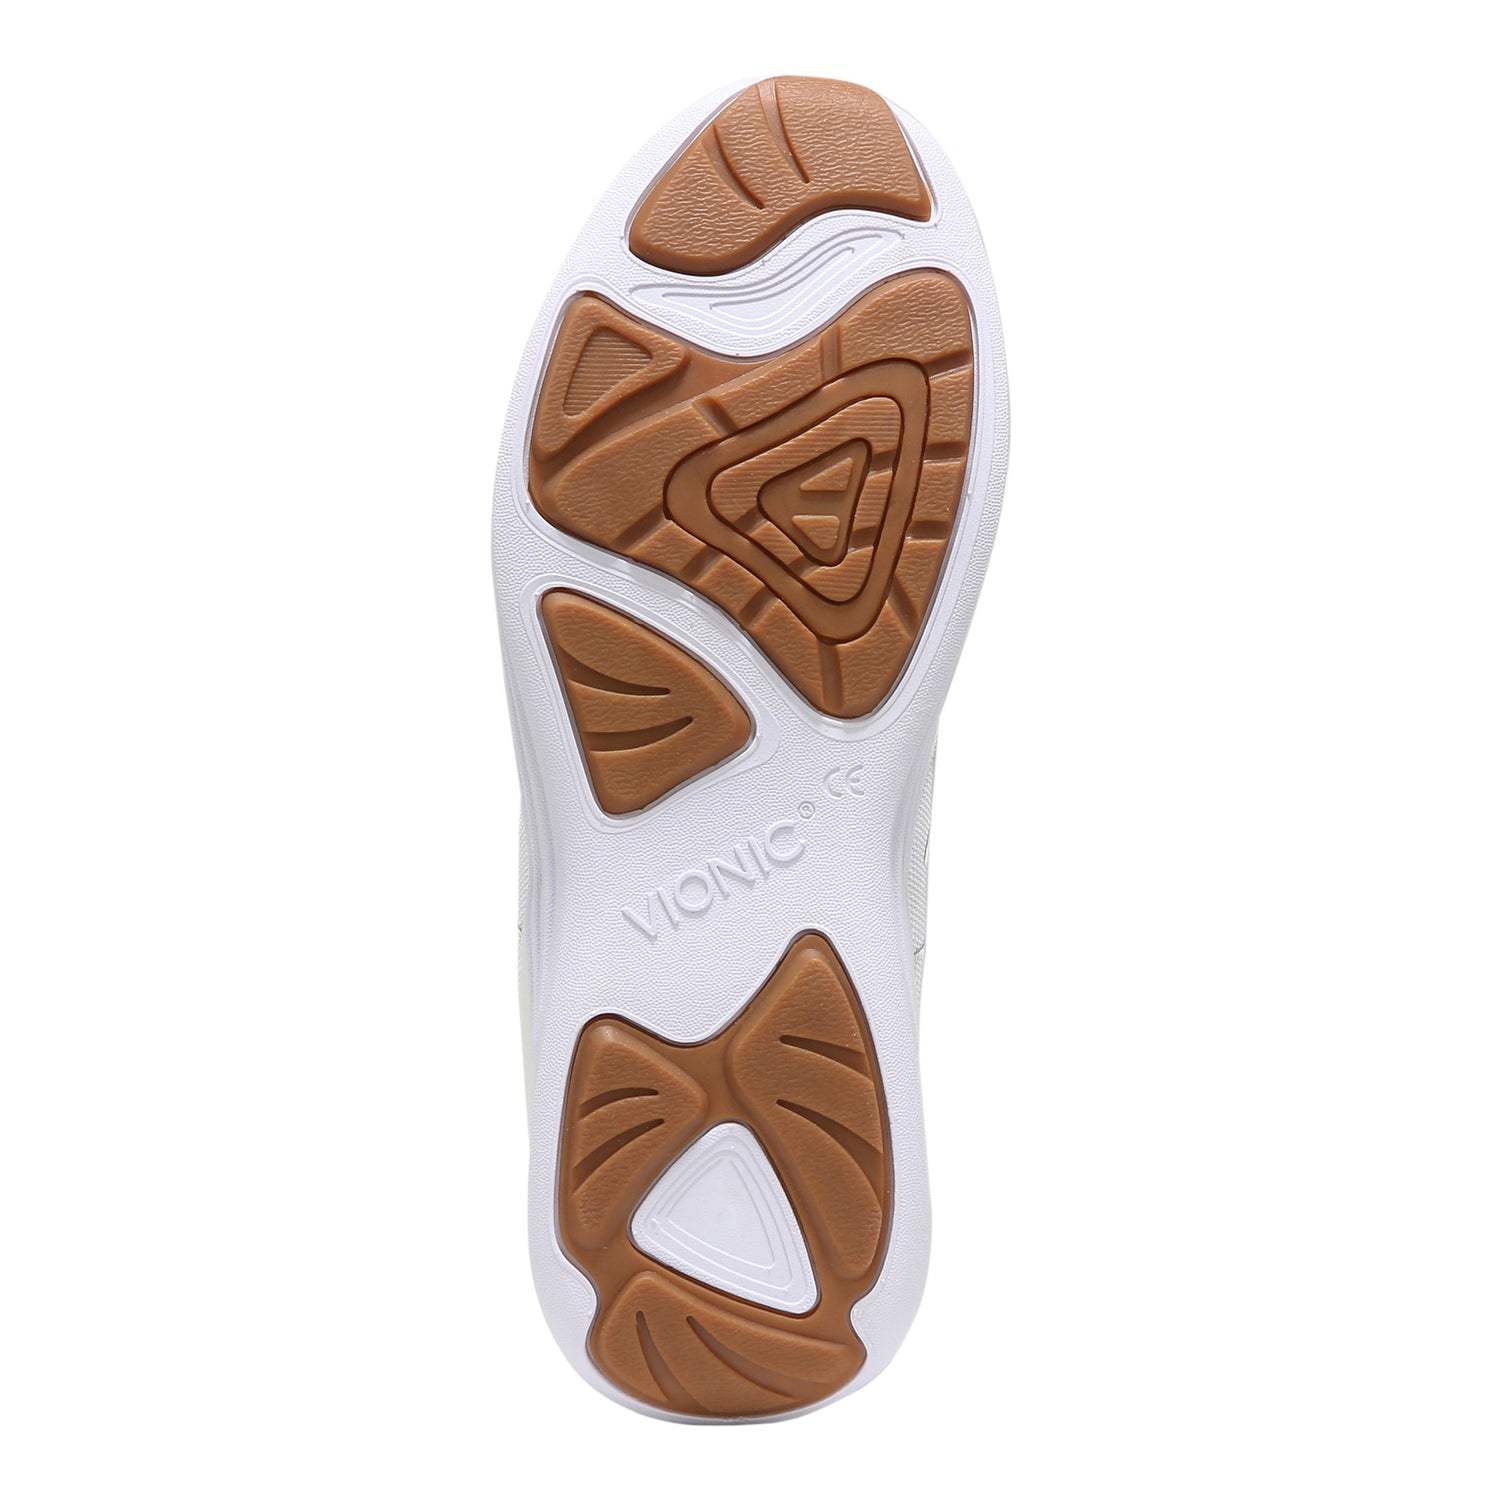 Peltz Shoes  Women's Vionic Agile Audie Sneaker WHITE I2035M1100